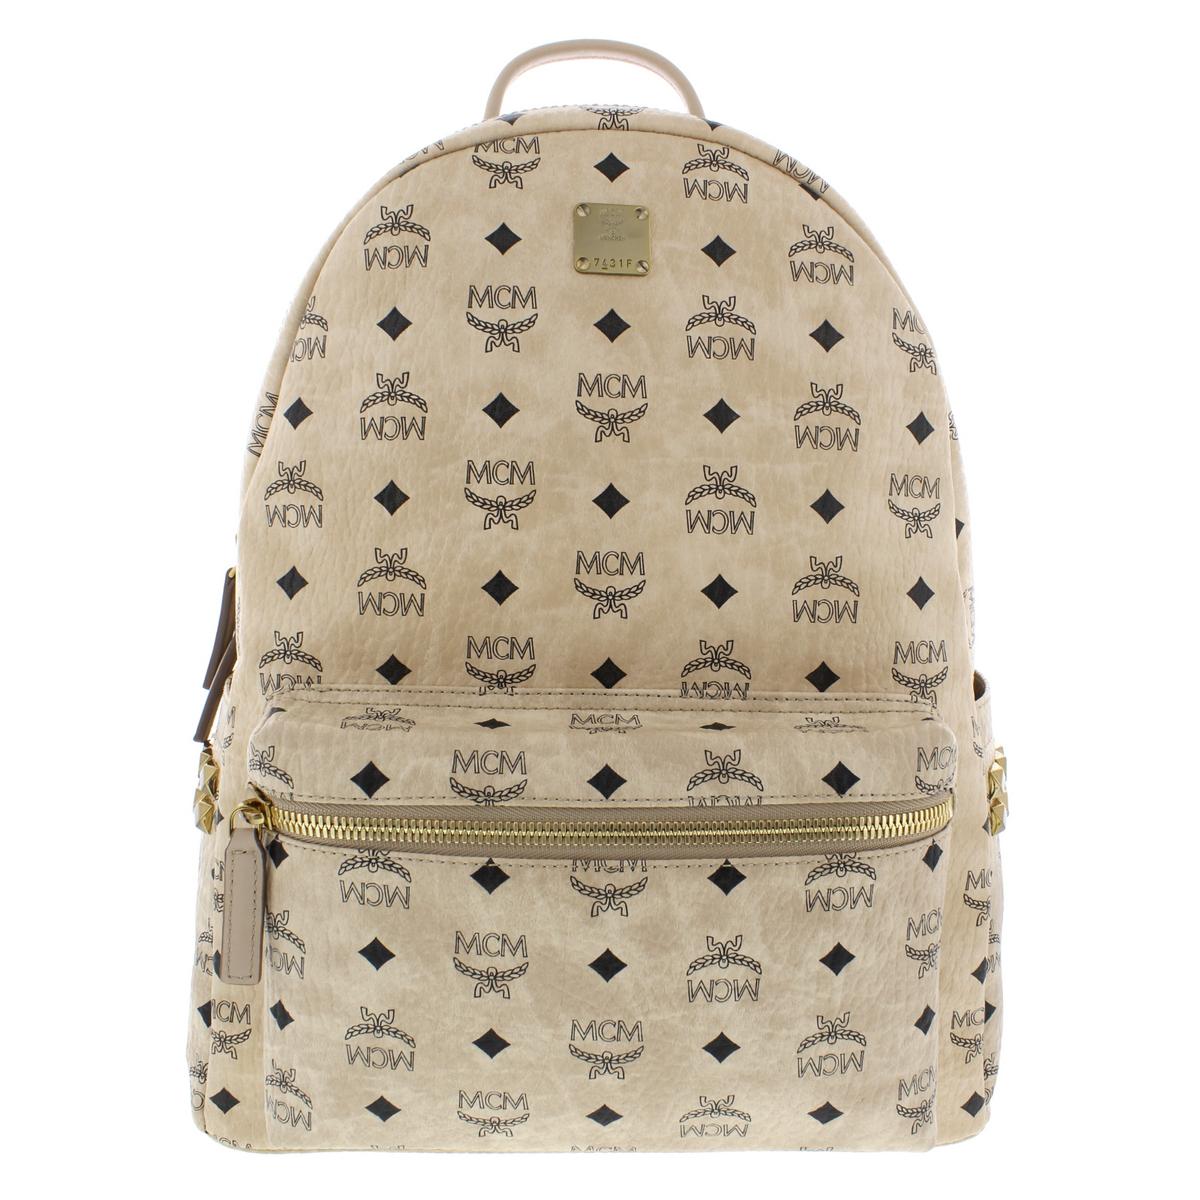 MCM Stark Beige Studded Monogram Fashion Backpack O/S BHFO 3345 | eBay